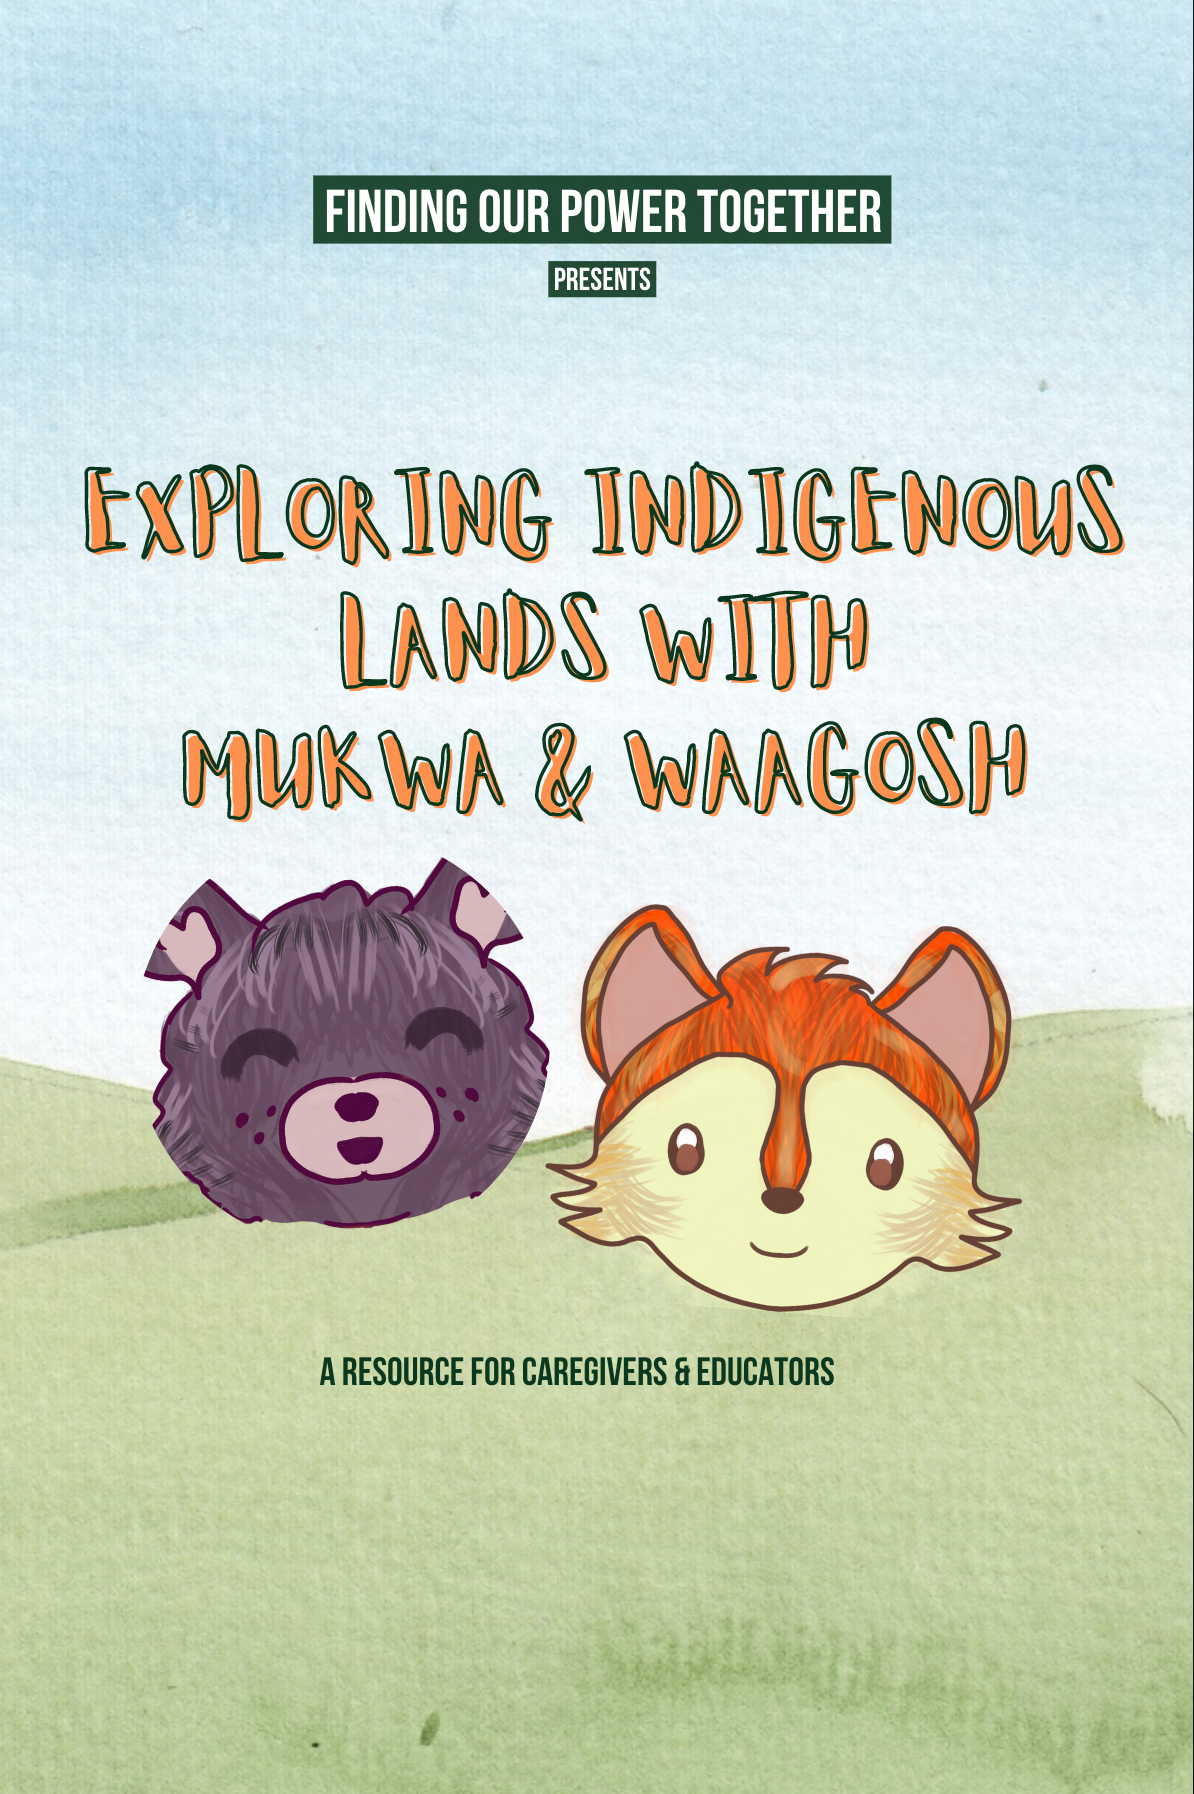 Exploring Indigenous Lands with Mukwa and Wagoosh